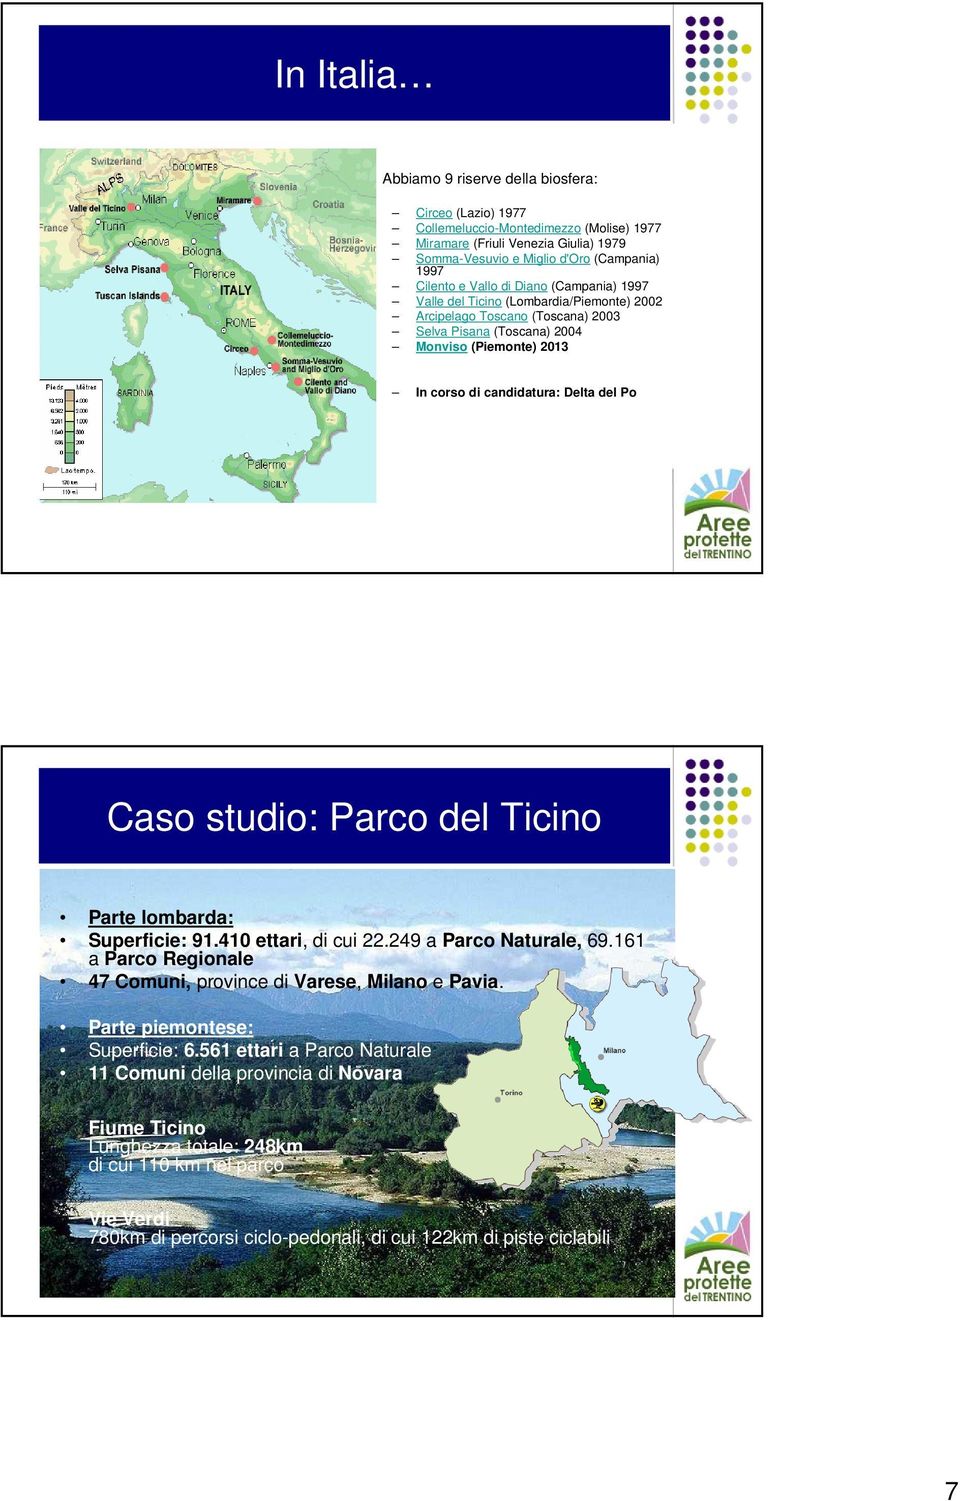 Diano (Campania) 1997 Valle del Ticino (Lombardia/Piemonte) 2002 Arcipelago Toscano (Toscana) 2003 Selva